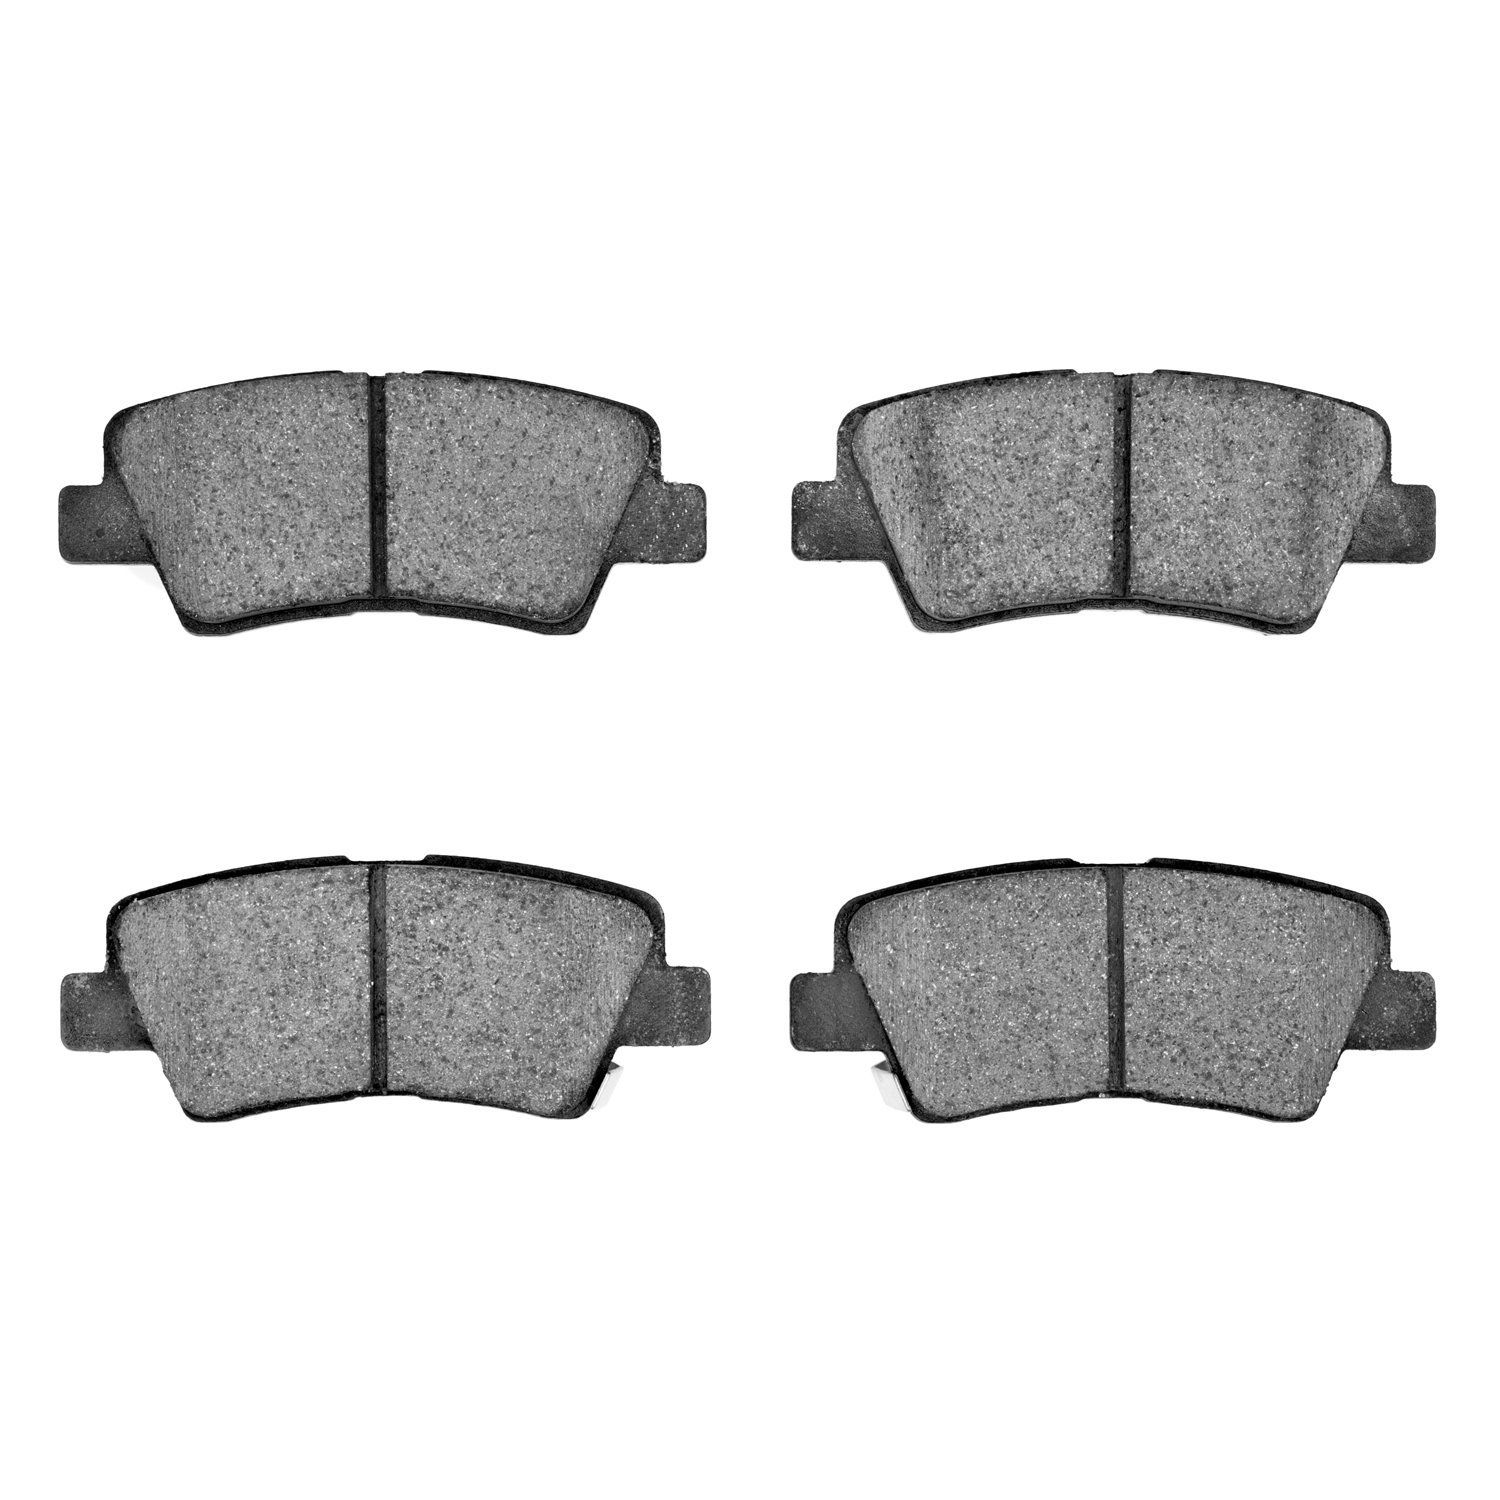 Semi-Metallic Brake Pads, Fits Select Fits Multiple Makes/Models, Position: Rear